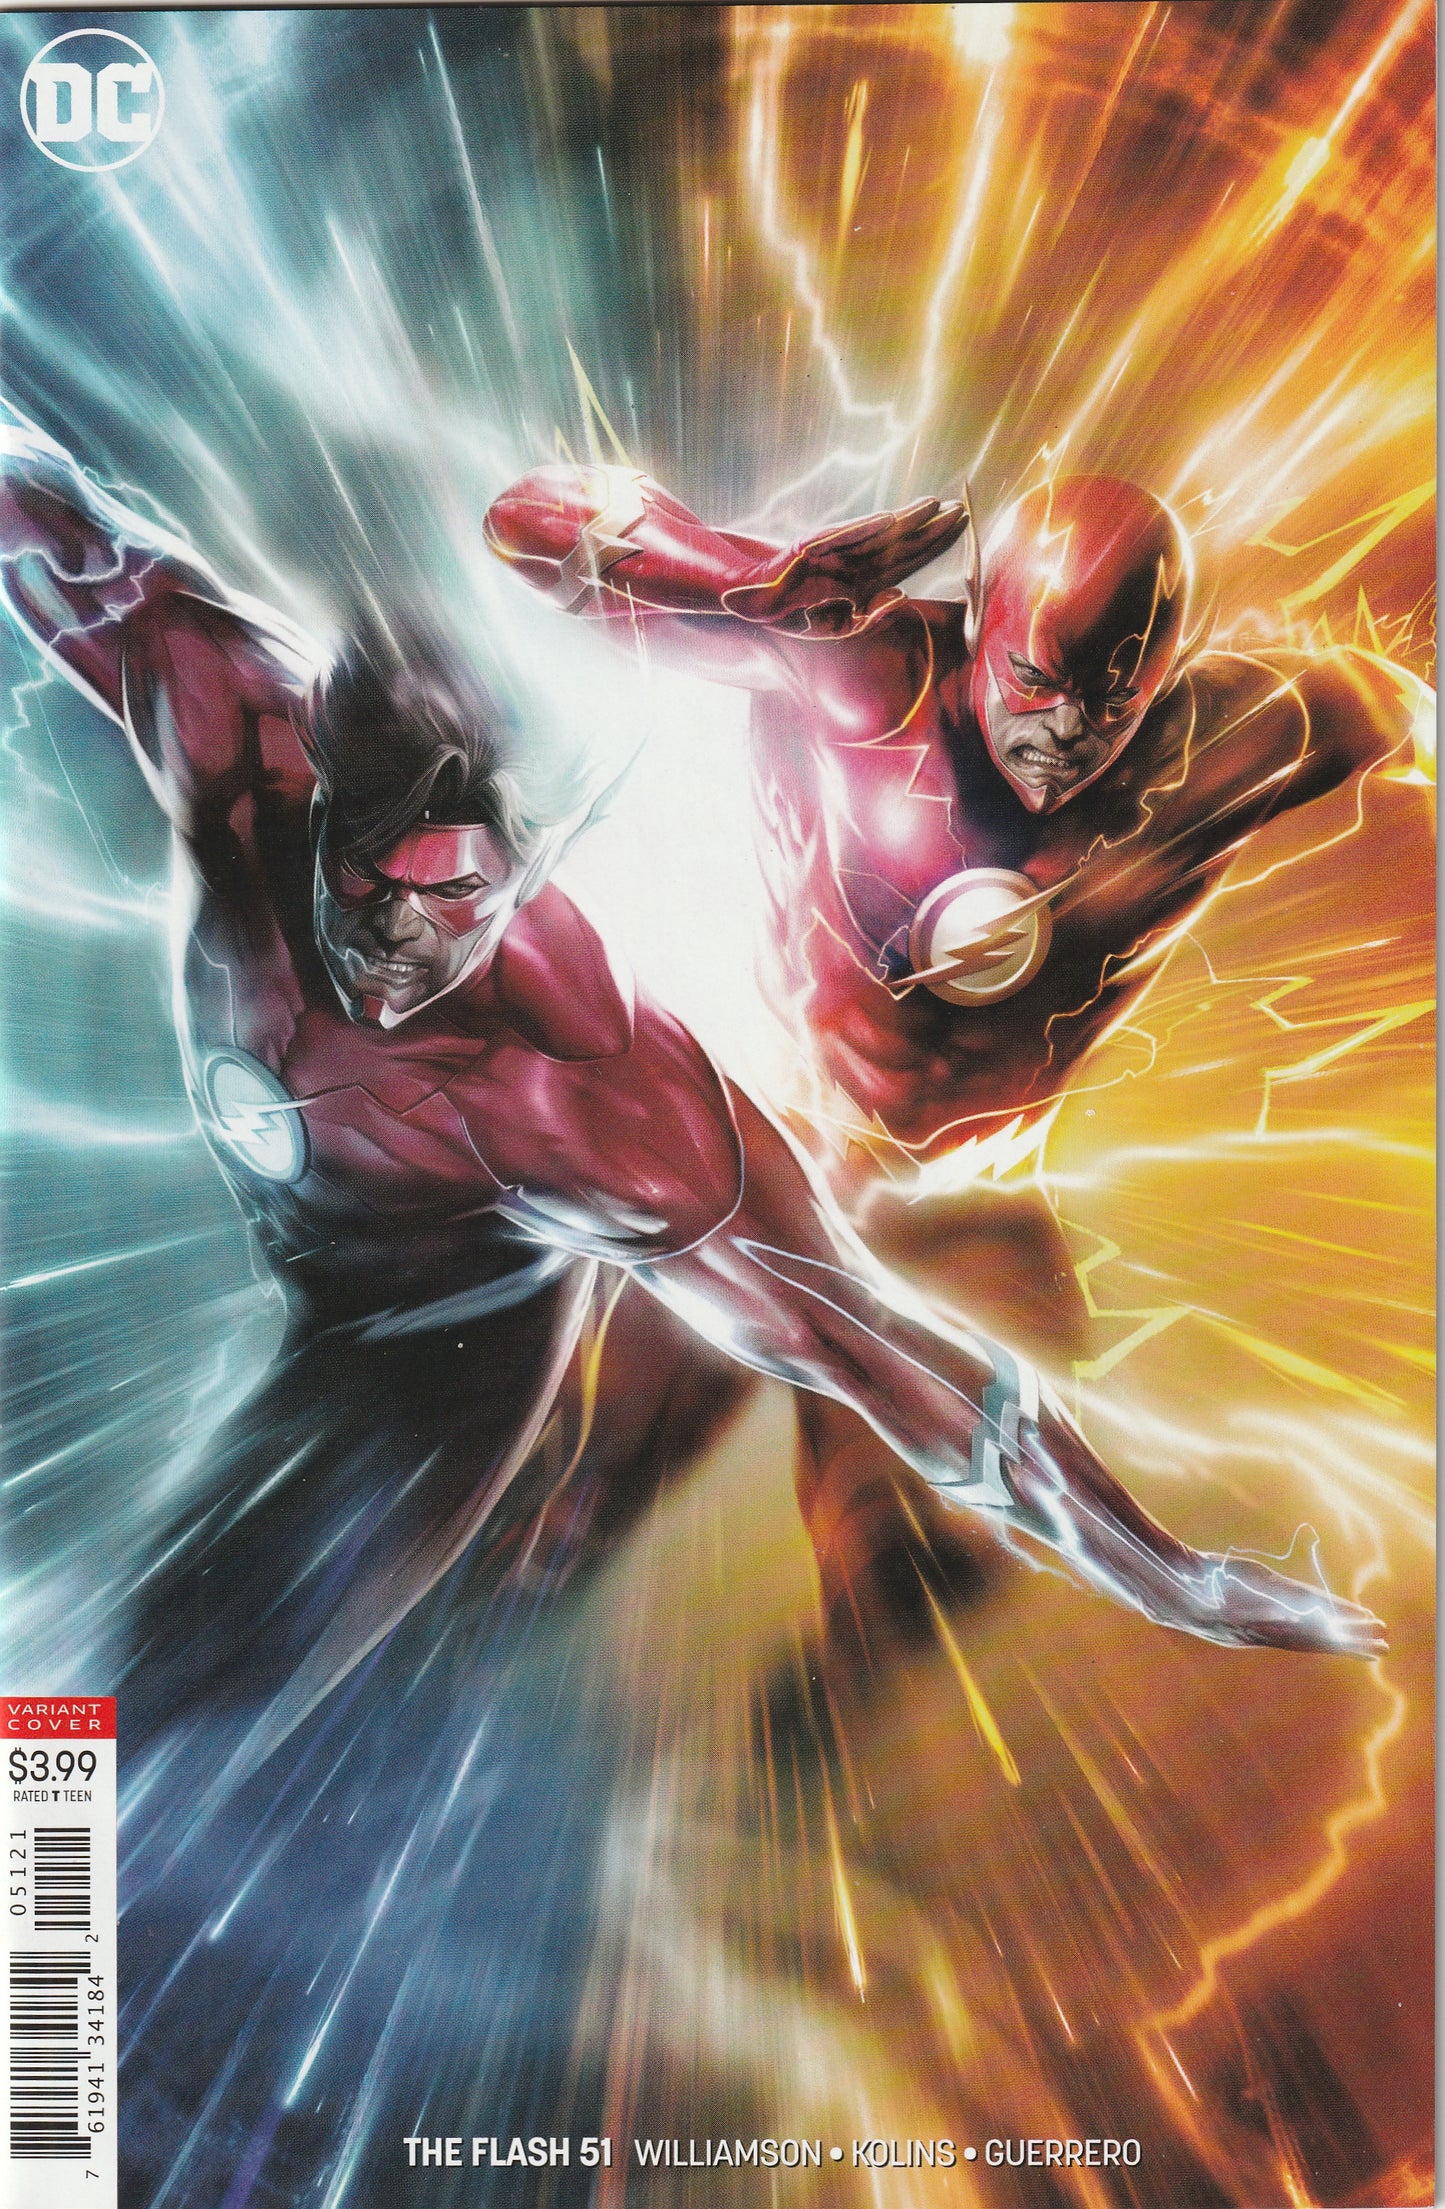 The Flash #51 (2018) - Francesco Mattina Variant Cover